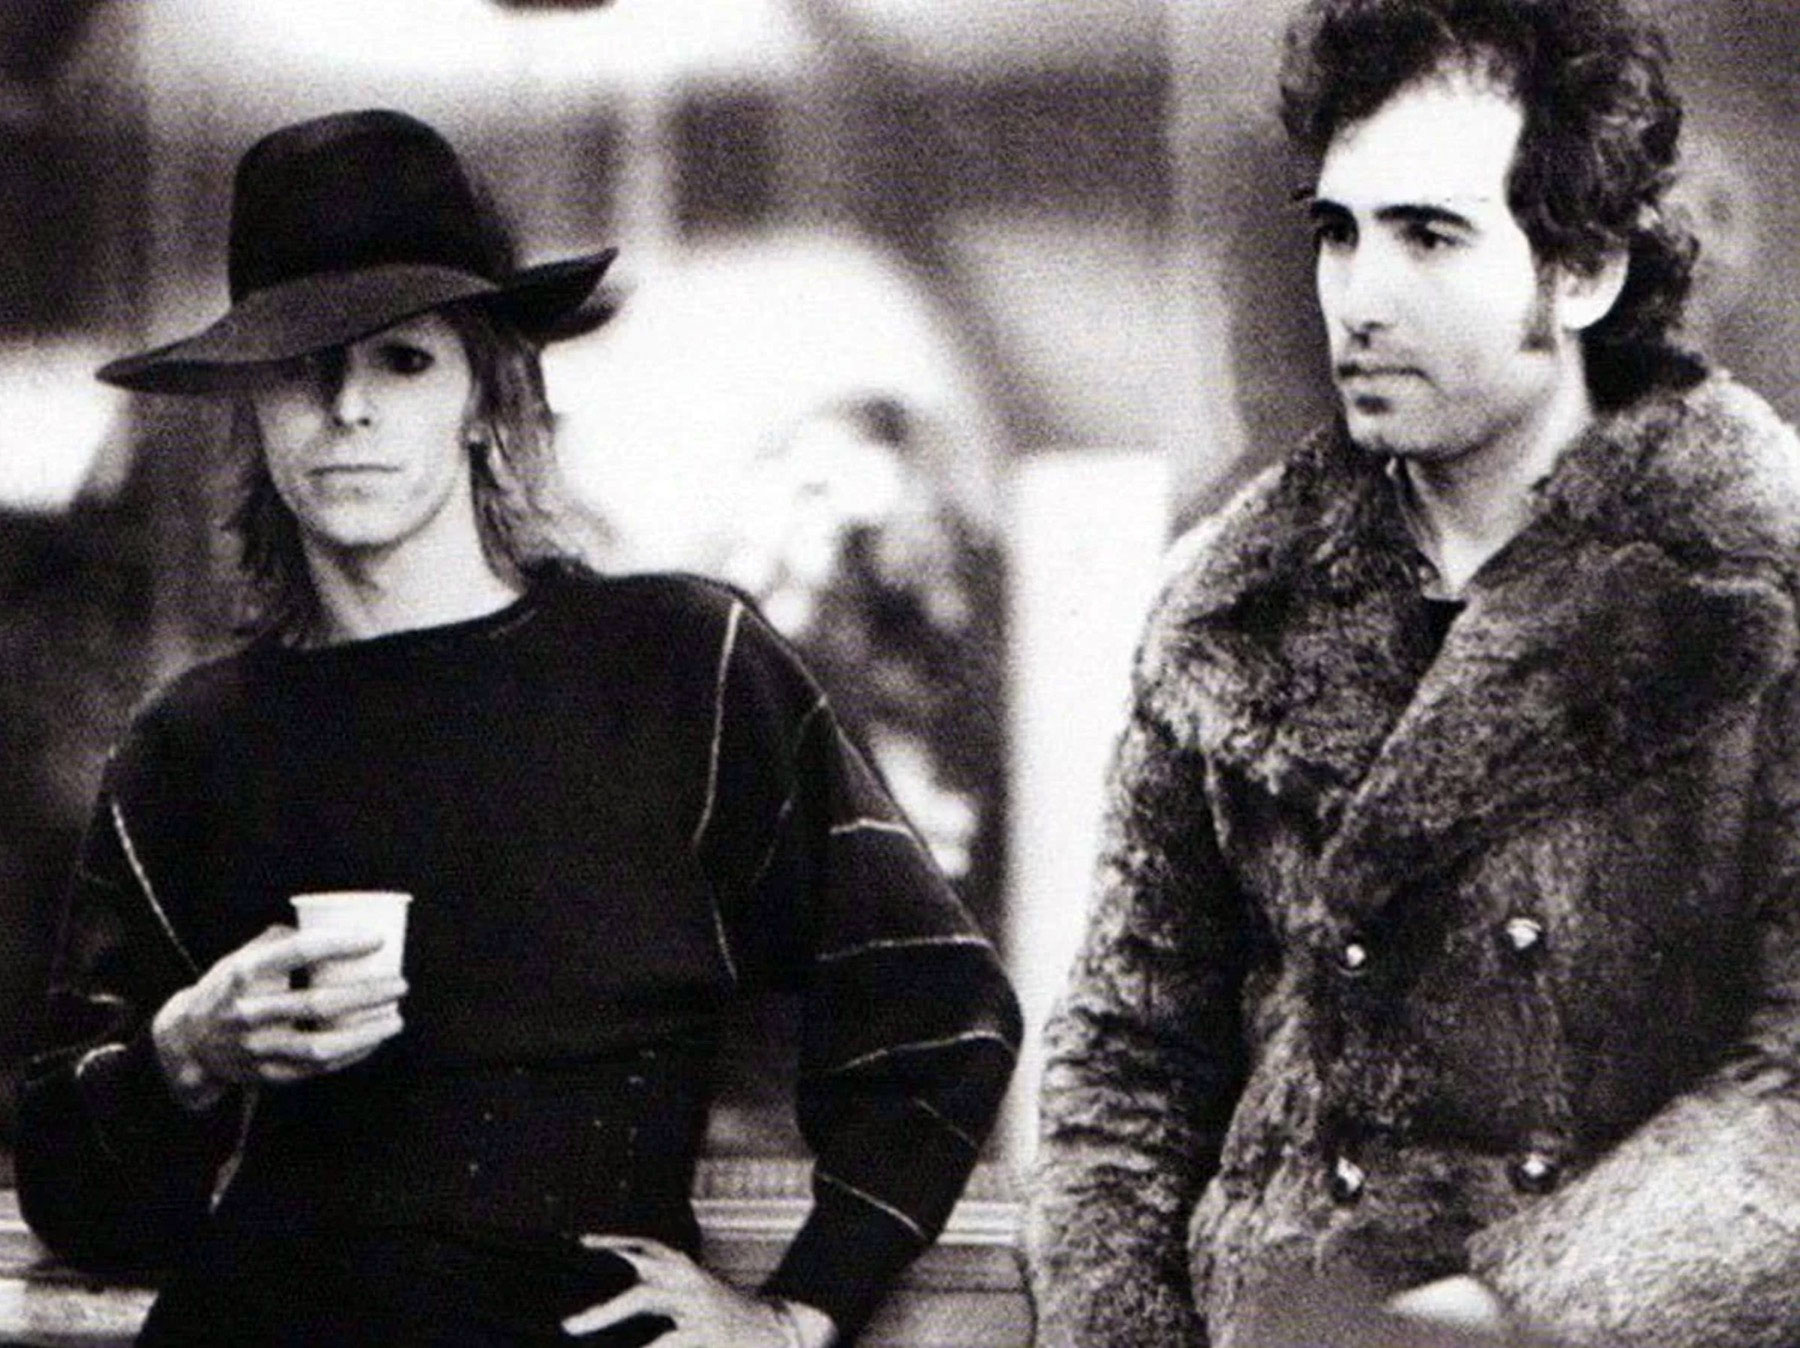 David Bowie and Mike Garson, 14 January 1974 (photo: Kate Simon)